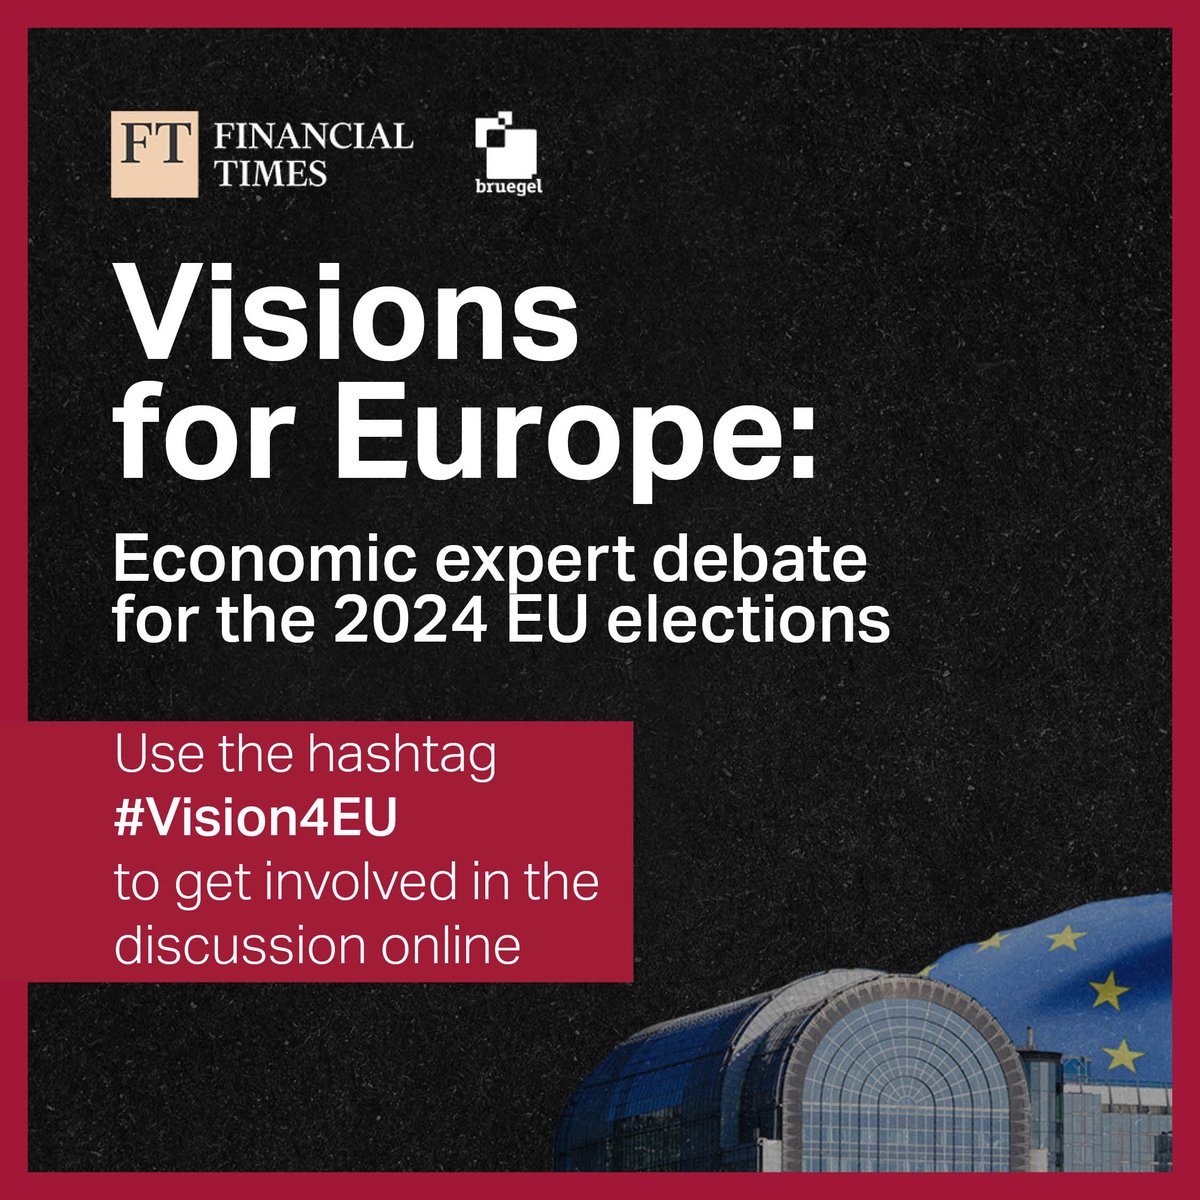 LIVE NOW:

Don't miss out on the #Vision4EU debate with @ThanasisBakolas @EPPGroup @Fred_Boccara @europeanleft @alvfinn @ALDEParty @EurLiberalForum  Dirk Friedrich @IDGroupEP @rasmusnordqvist @GreensEFA @MJRodriguesEU @PES_PSE @TheProgressives 

Tune in: bruegel.org/event/visions-…